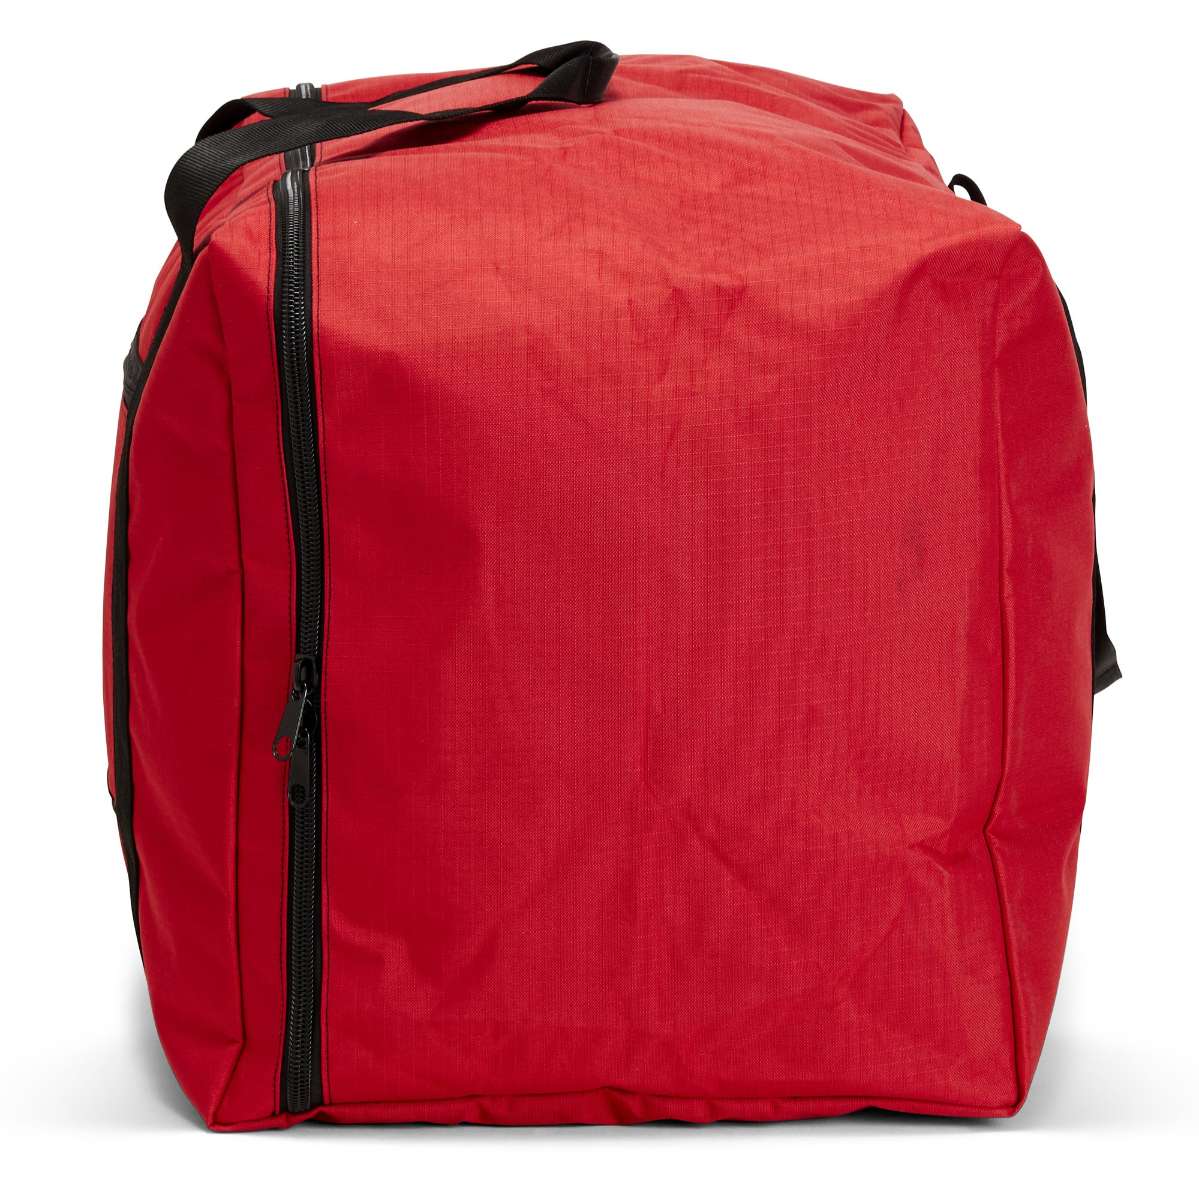 Line2Design Firefighter Gear Bag